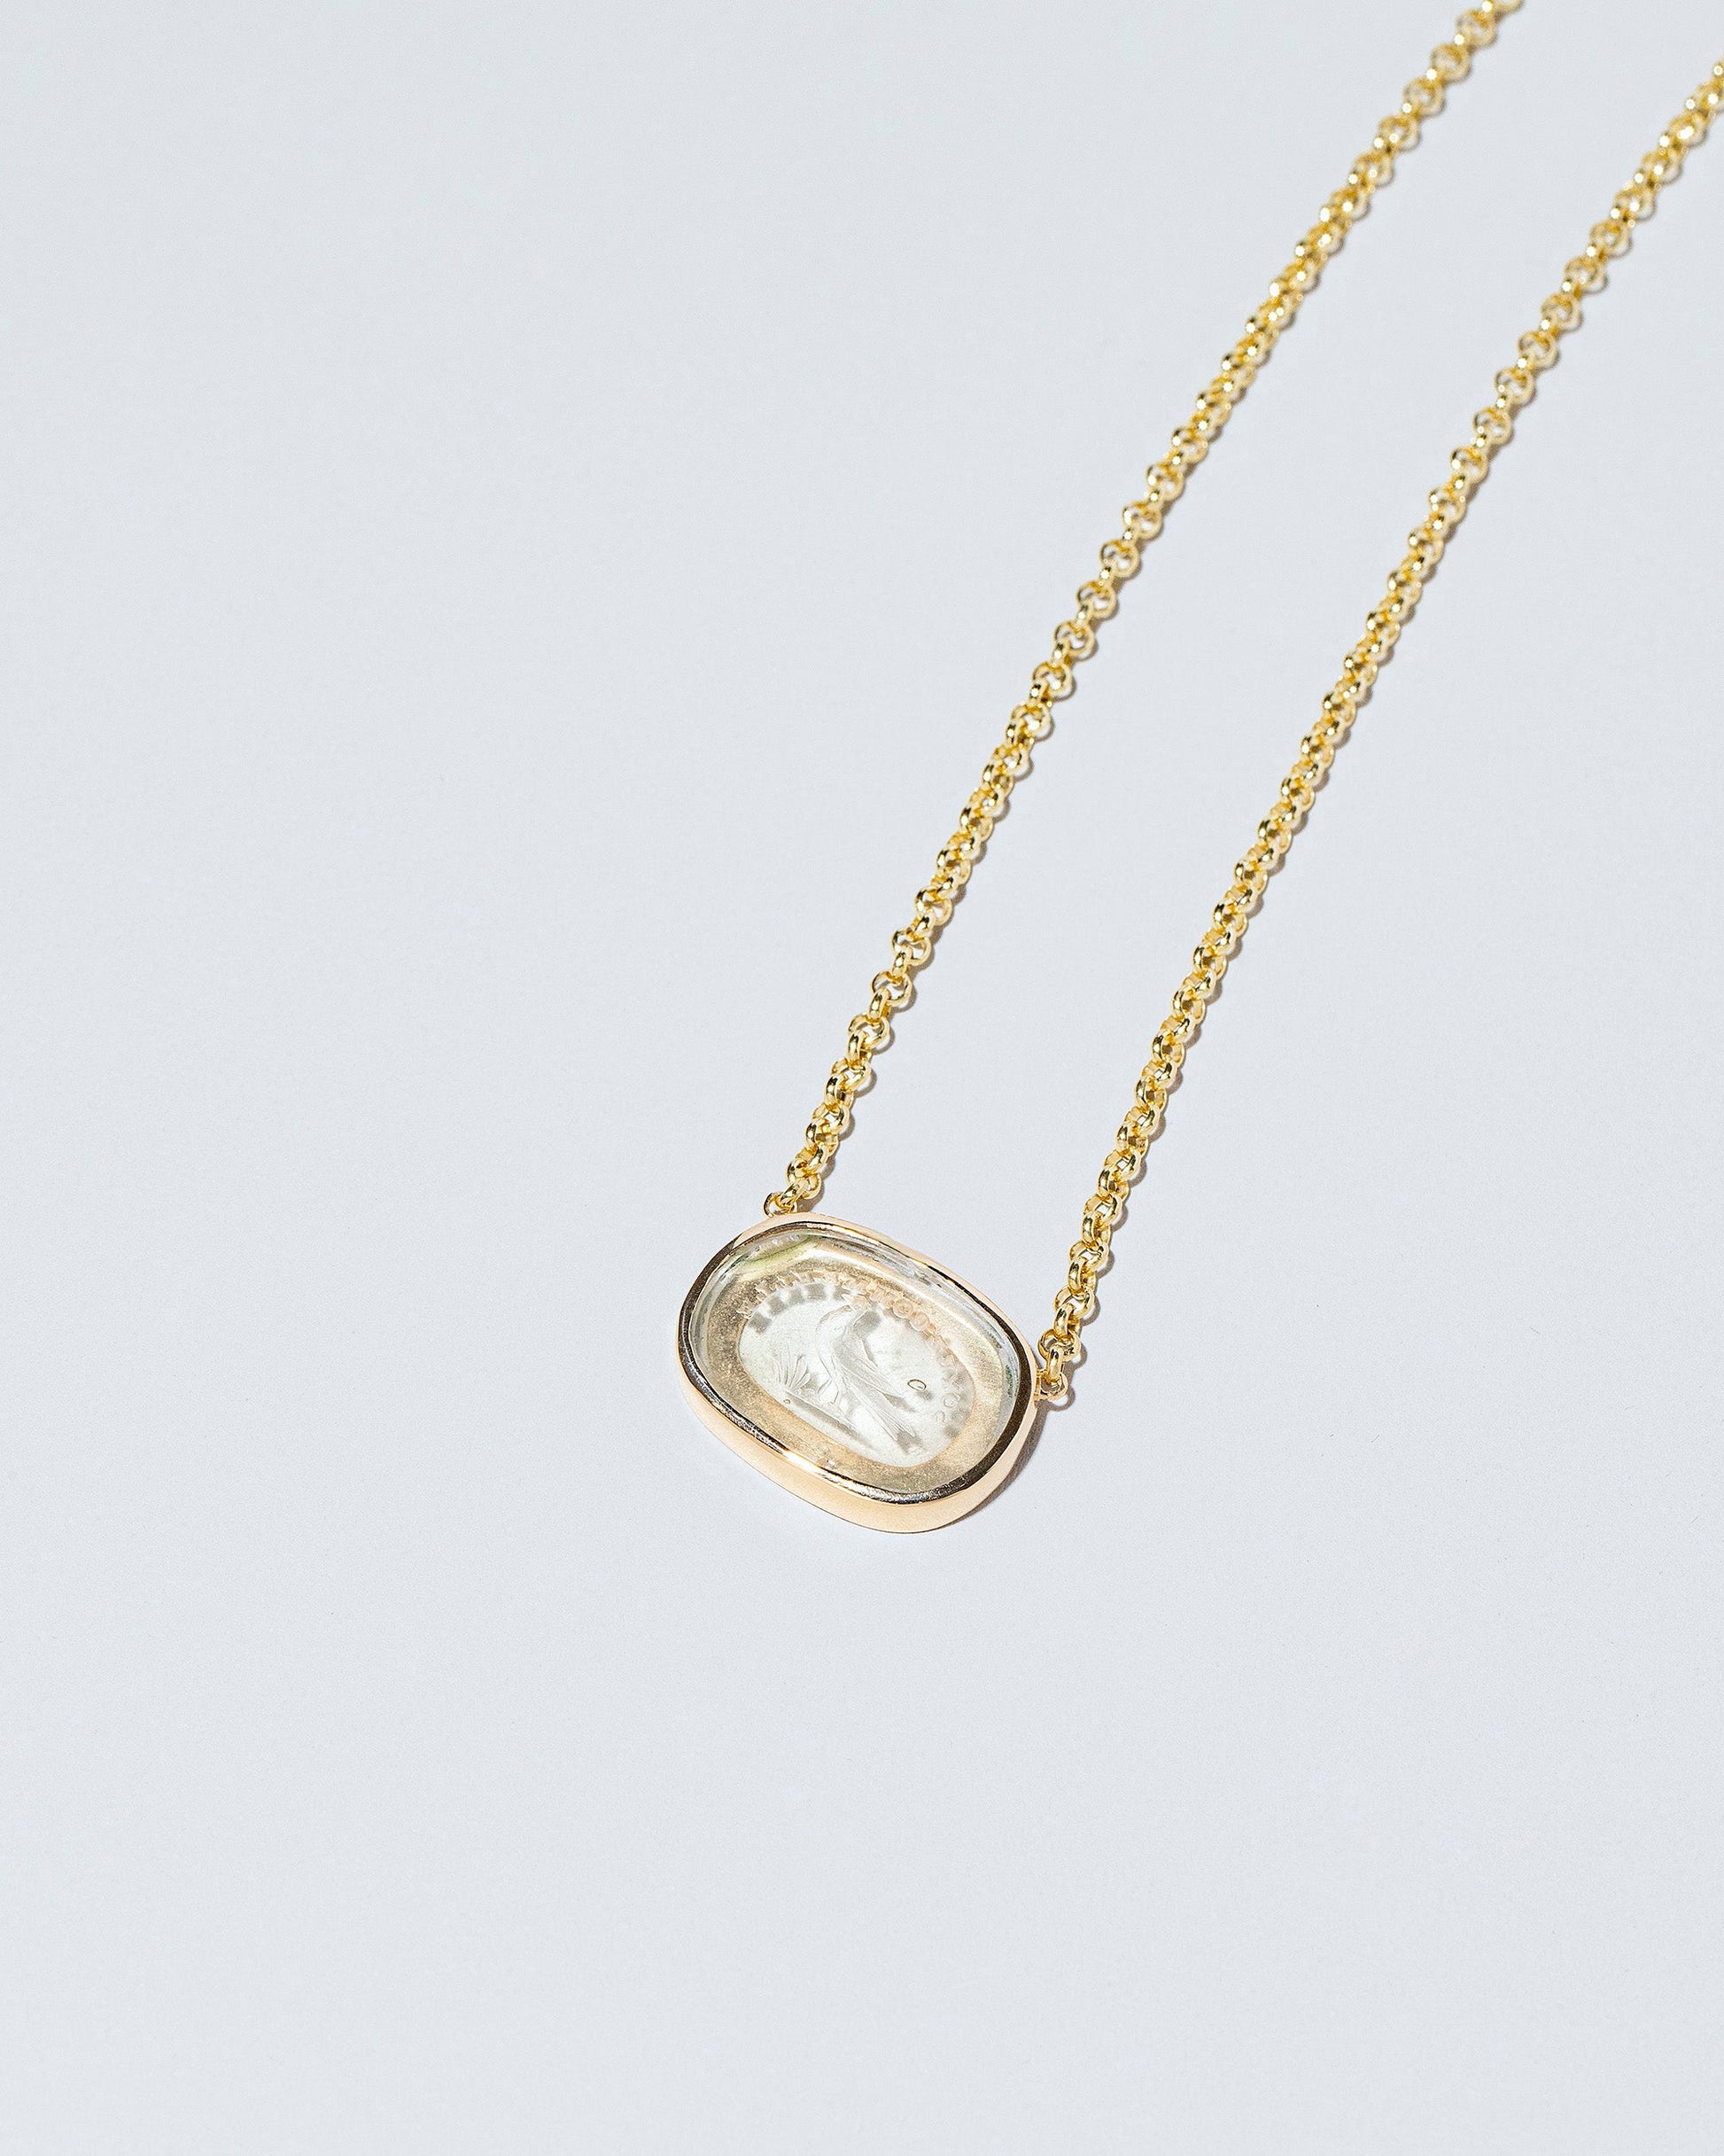  Grace Intaglio Seal Necklace on light color background.